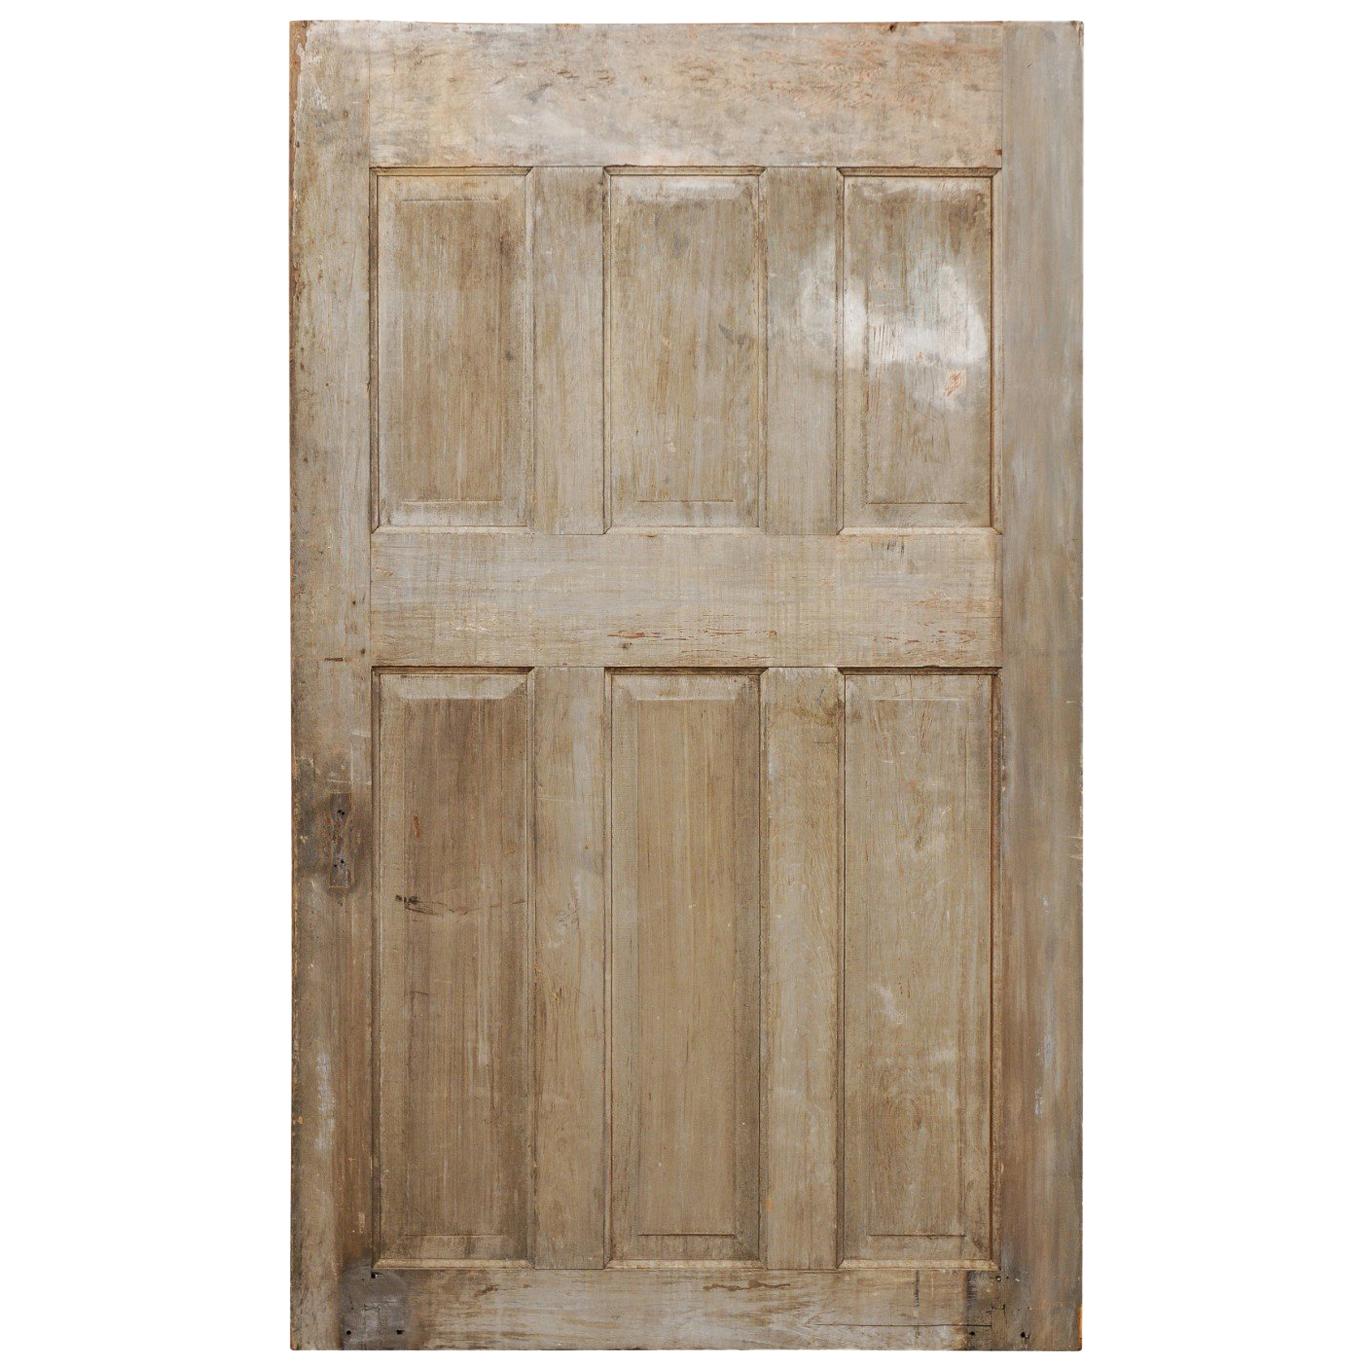 Single European 19th Century Six-Panel Wood Door